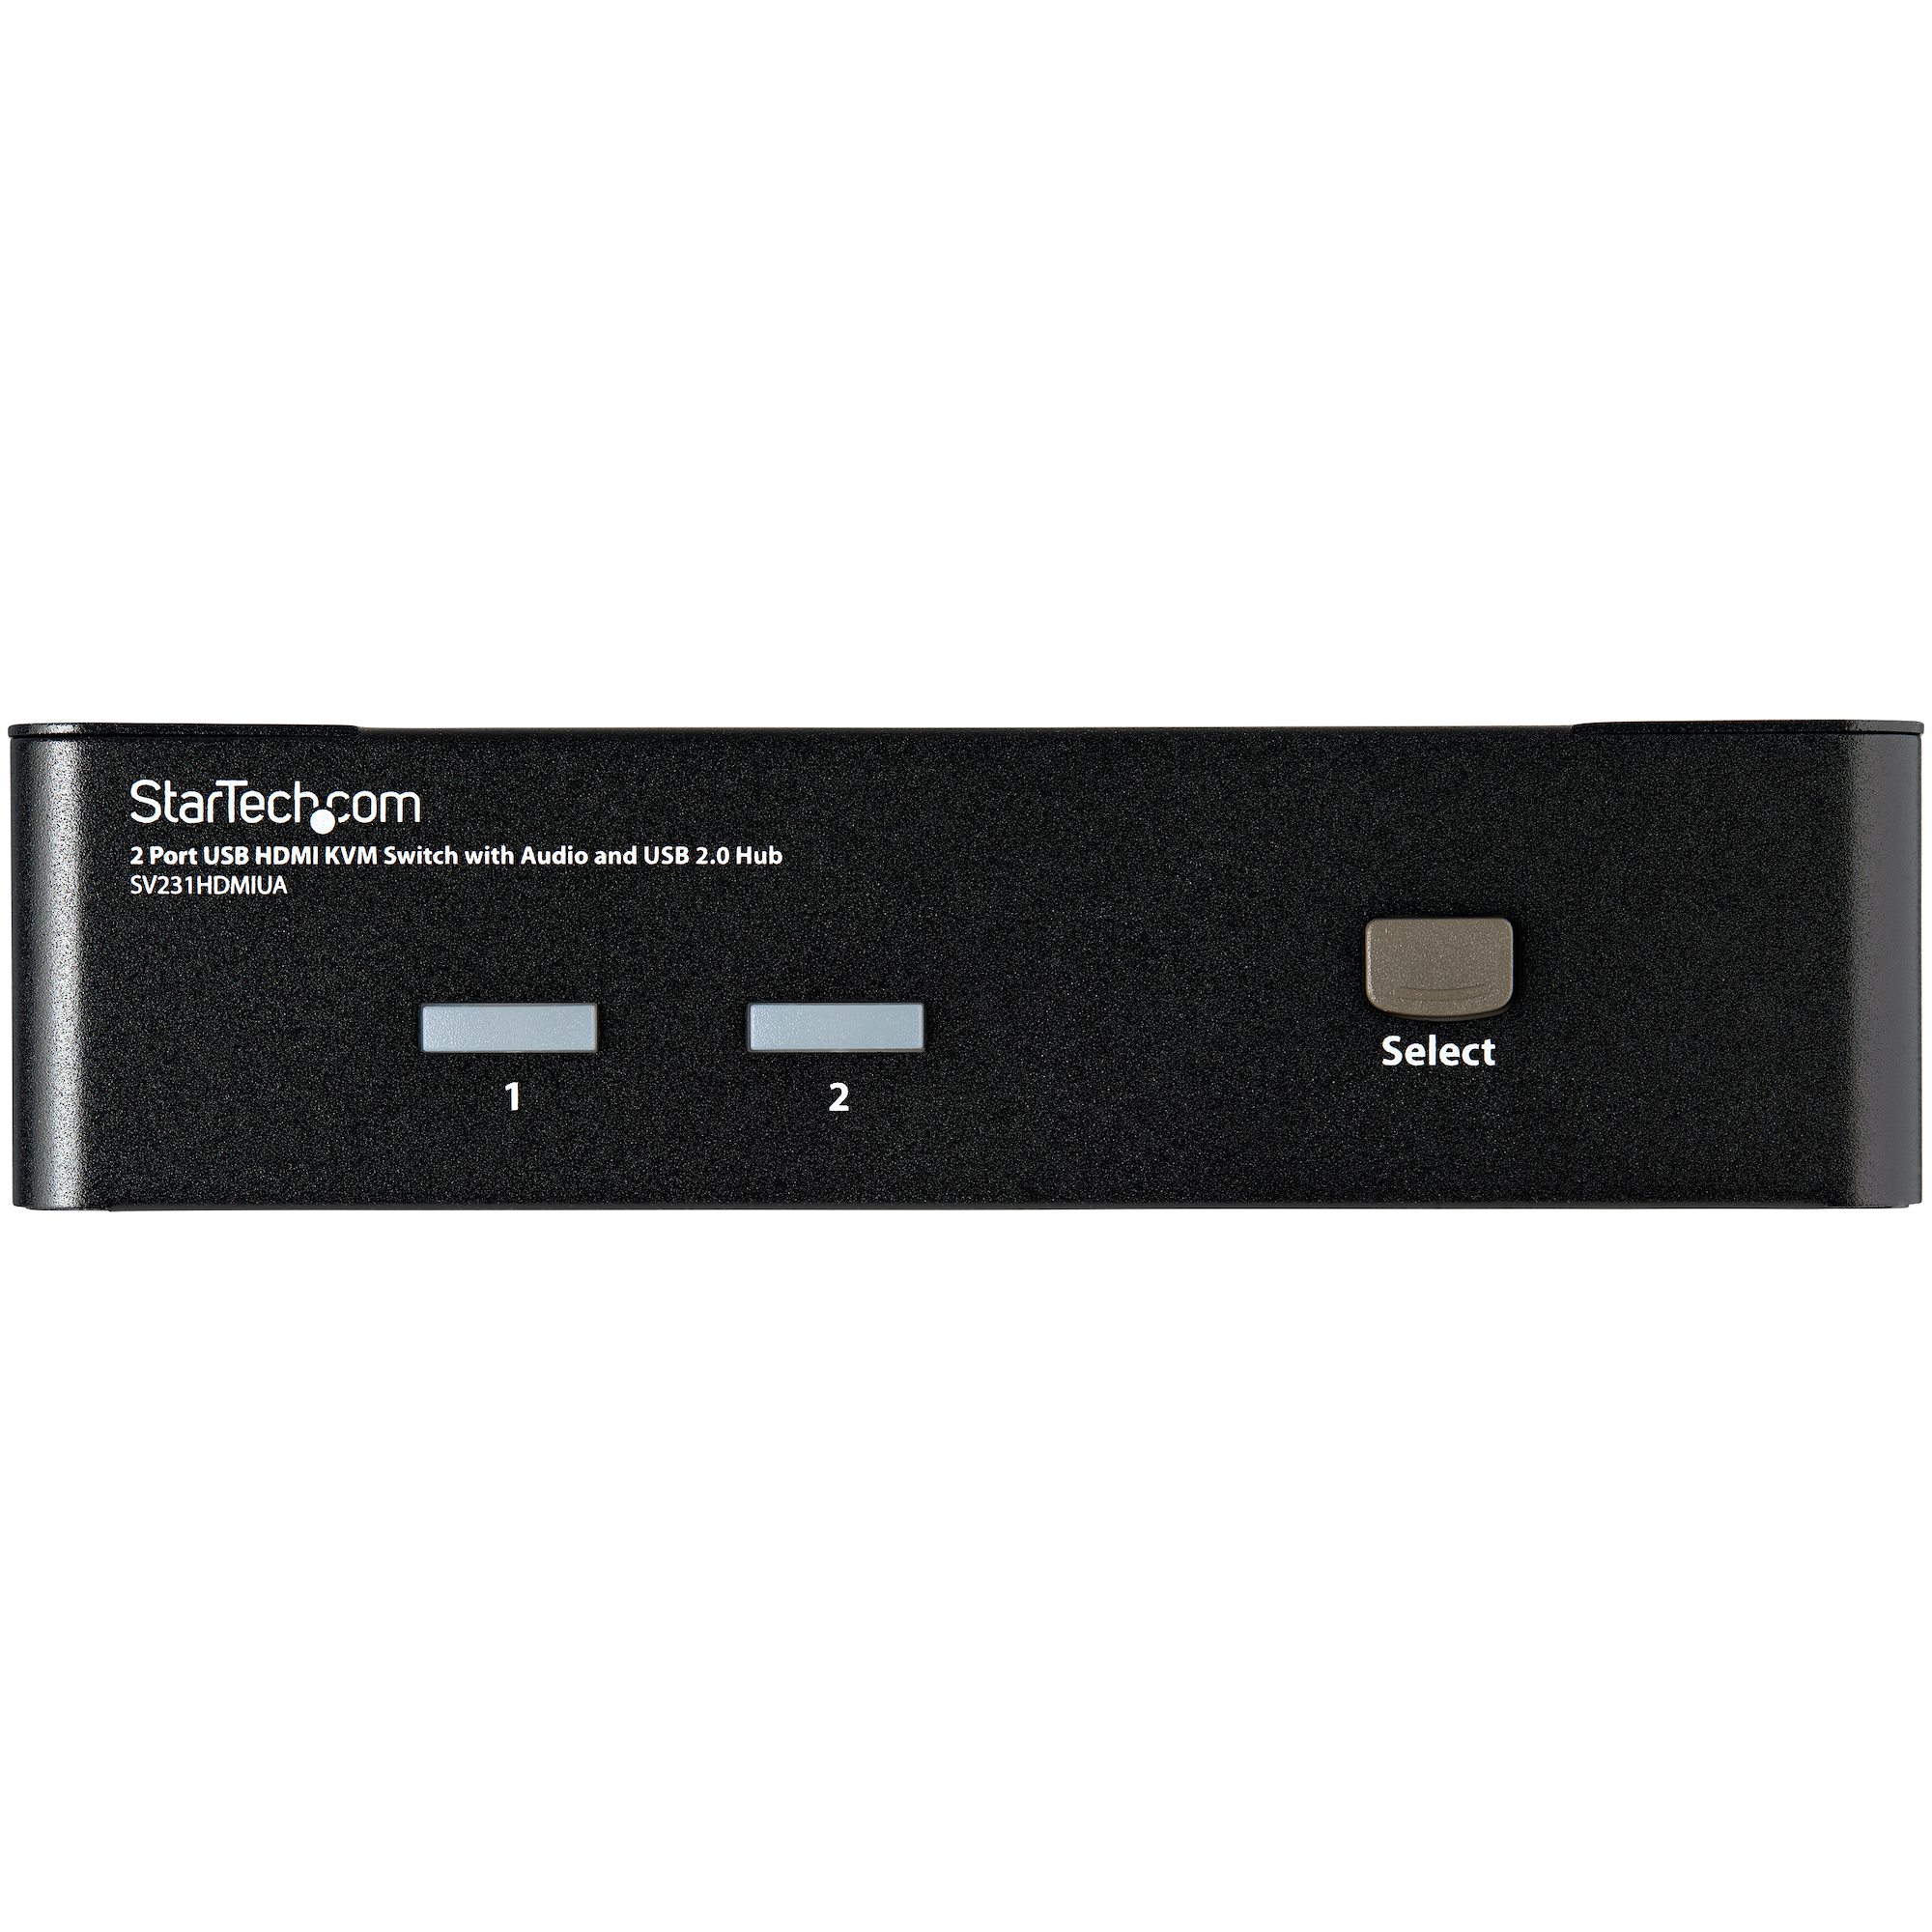 Startech 2 Port HDMI KVM Switch (SV211HDUA4K)